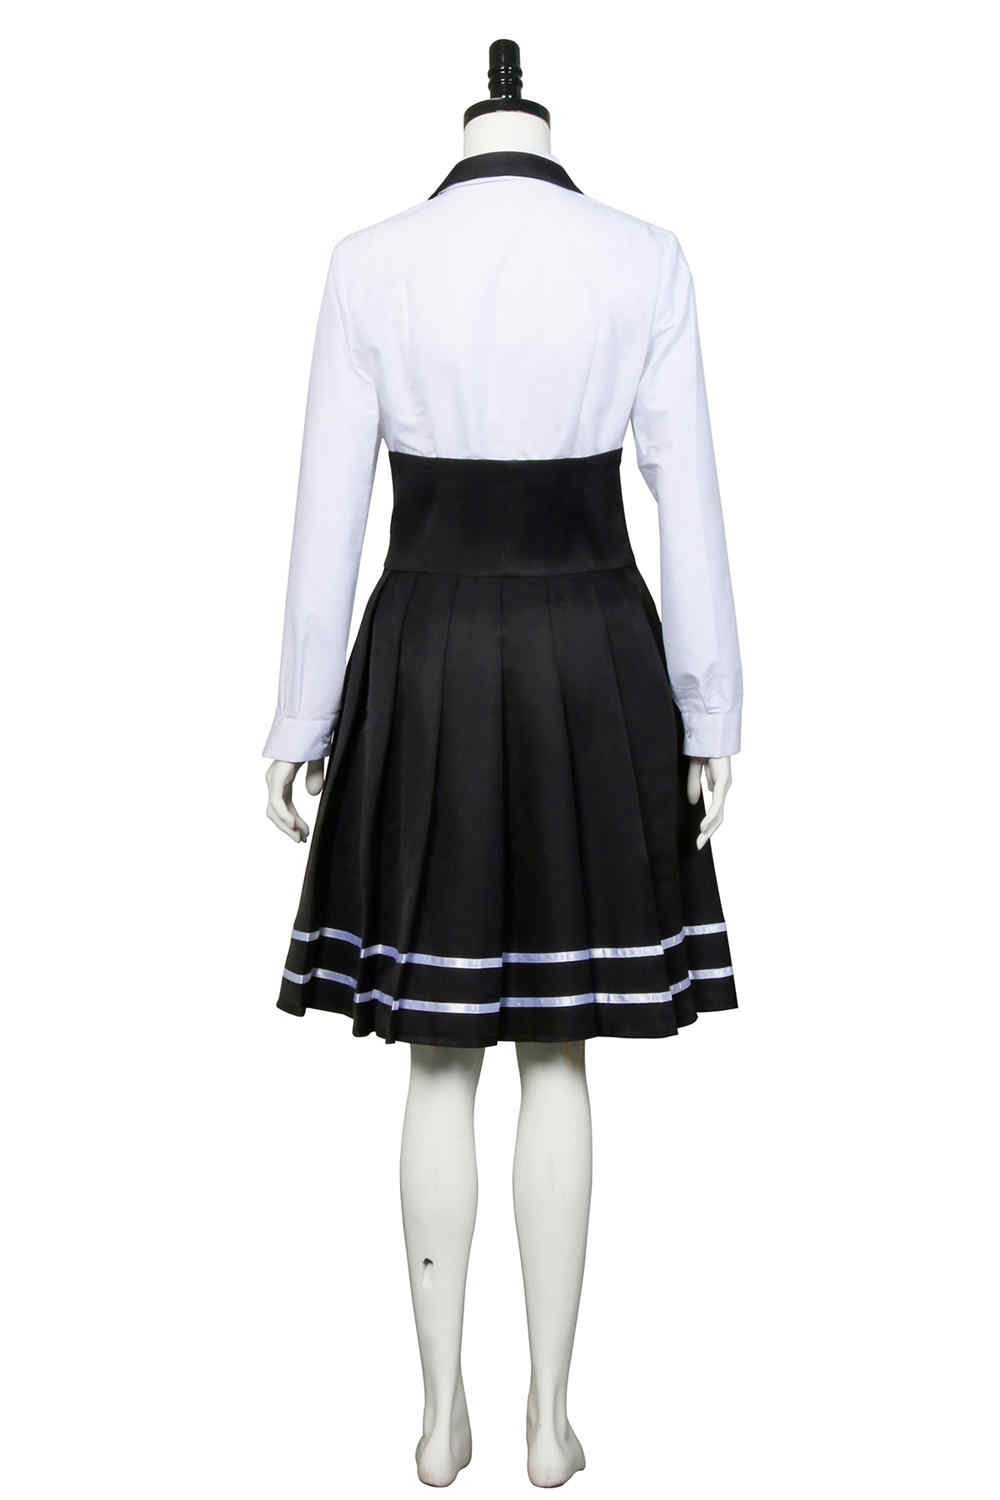 Anime Danganronpa V3 Shirogane Tsumugi School Uniform Skirts Outfit Halloween Carnival Costume Cosplay-Takerlama